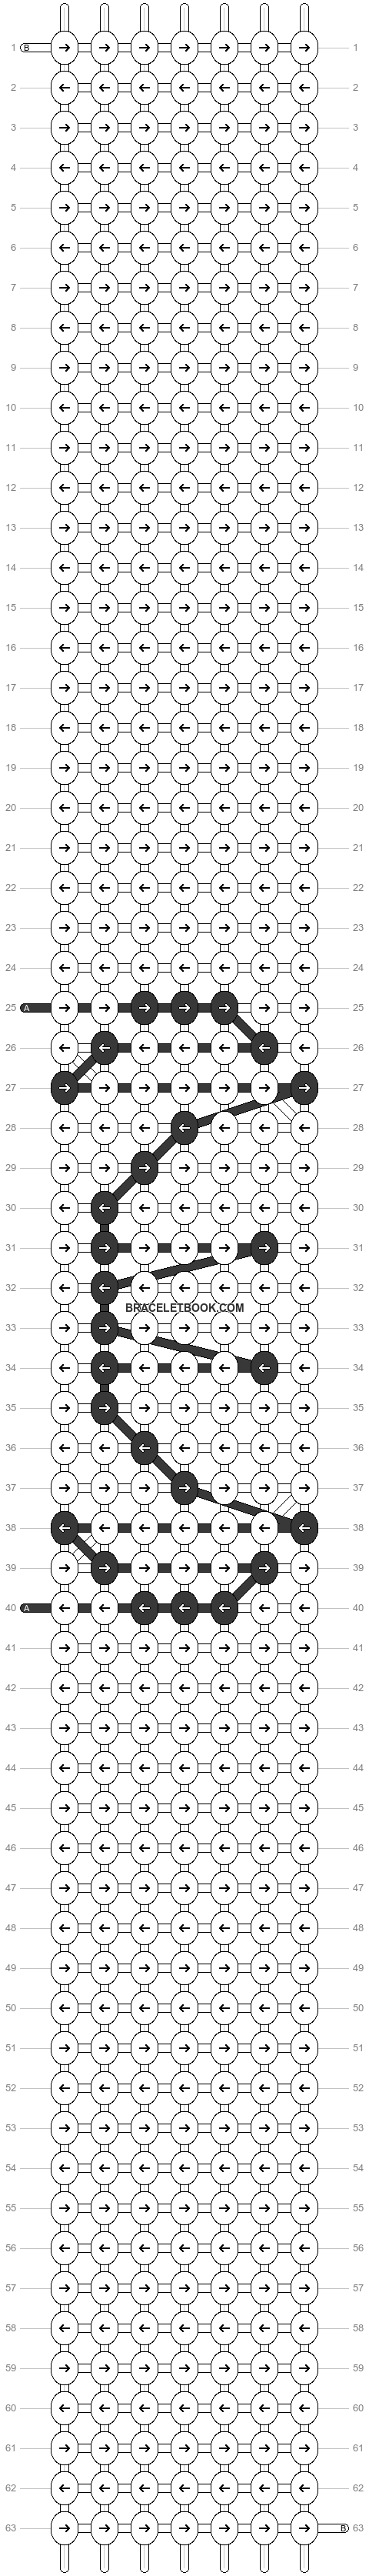 Alpha pattern #78135 variation #151977 pattern